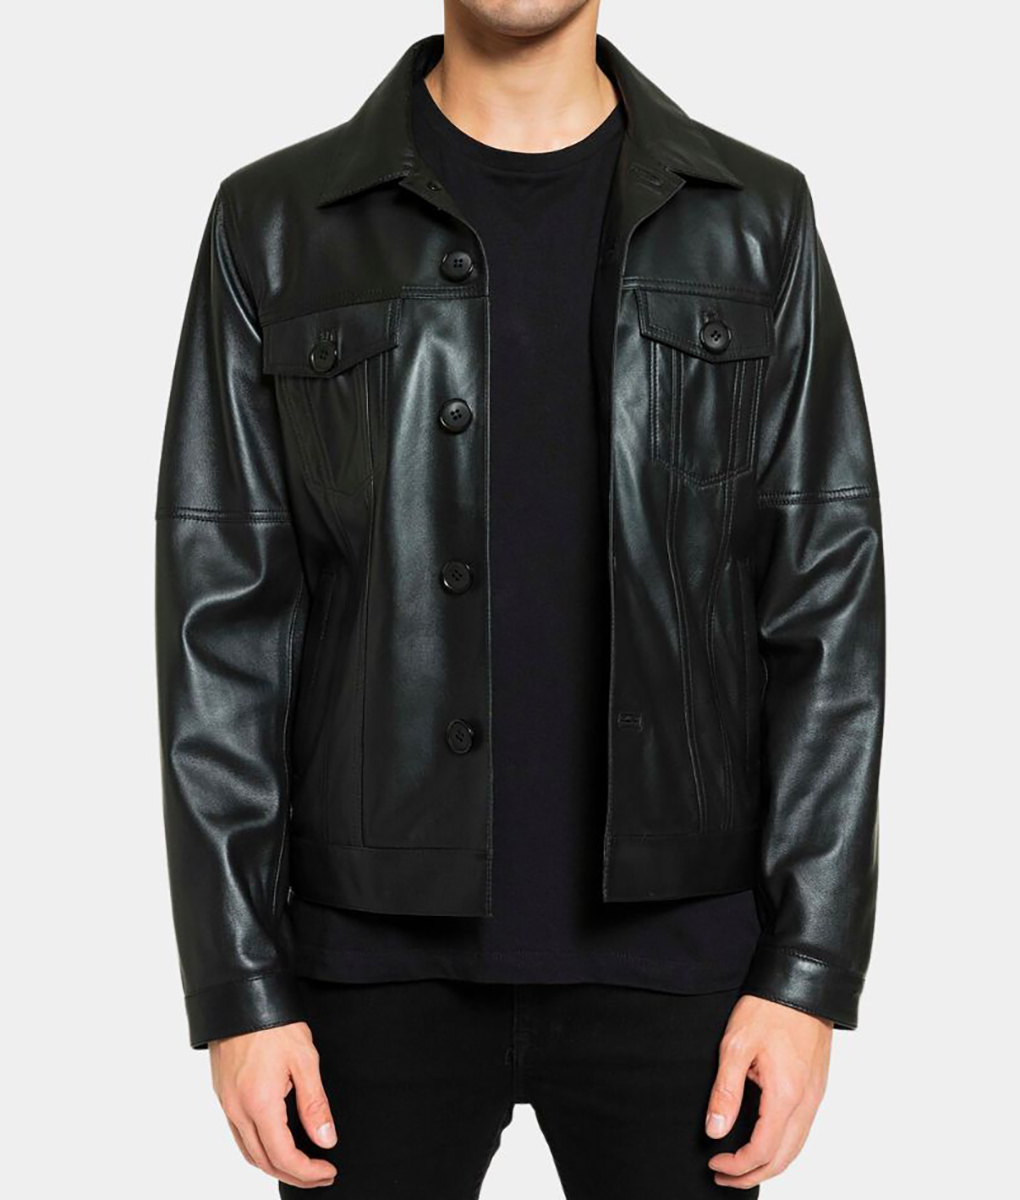 Elvis Black Jumpsuit - Elvis Presley Leather Suit | The Leather City